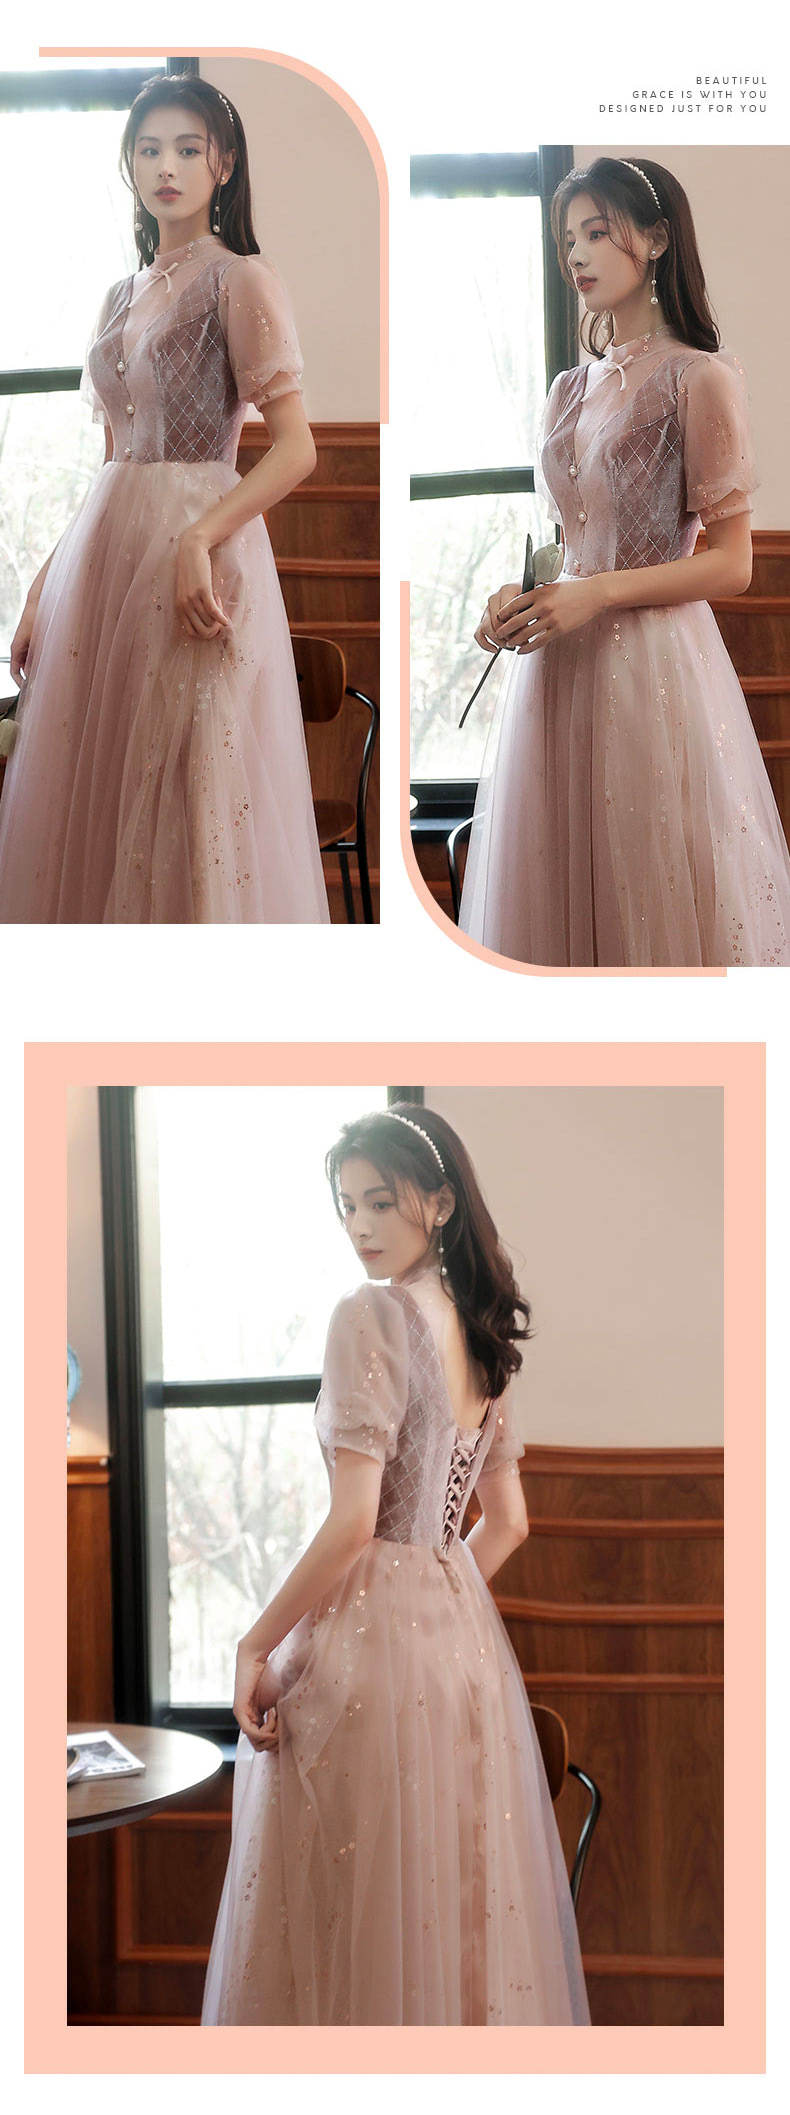 Fashion-Velvet-Cameo-Bridesmaid-Maxi-Dress-with-Long-Sleeves16.jpg